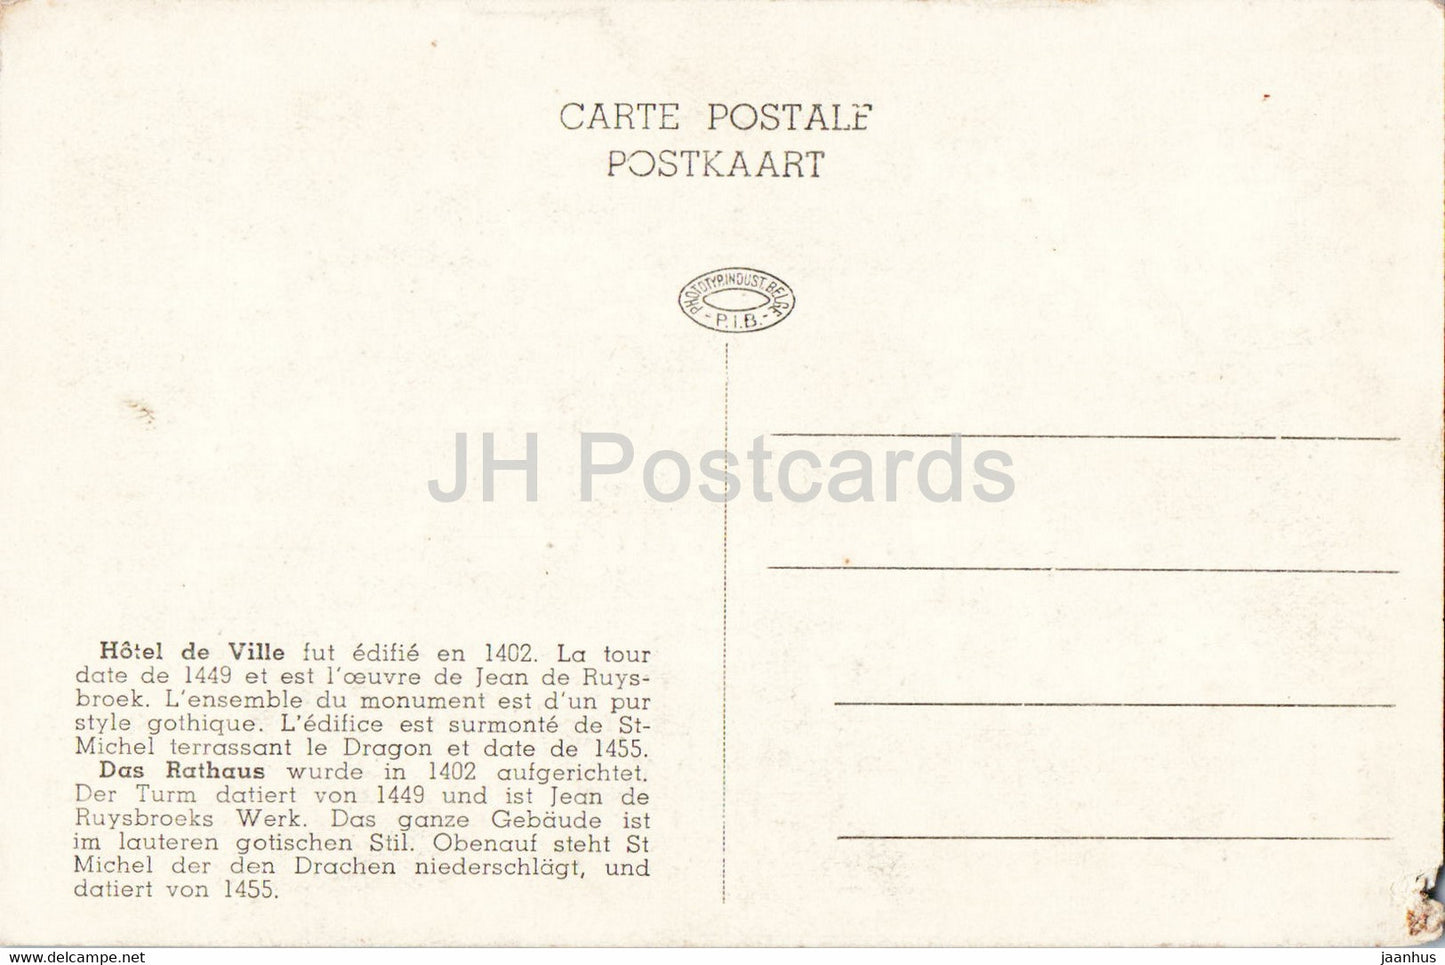 Bruxelles - Brussels - Hotel de Ville - Rathaus - old postcard - Belgium - unused